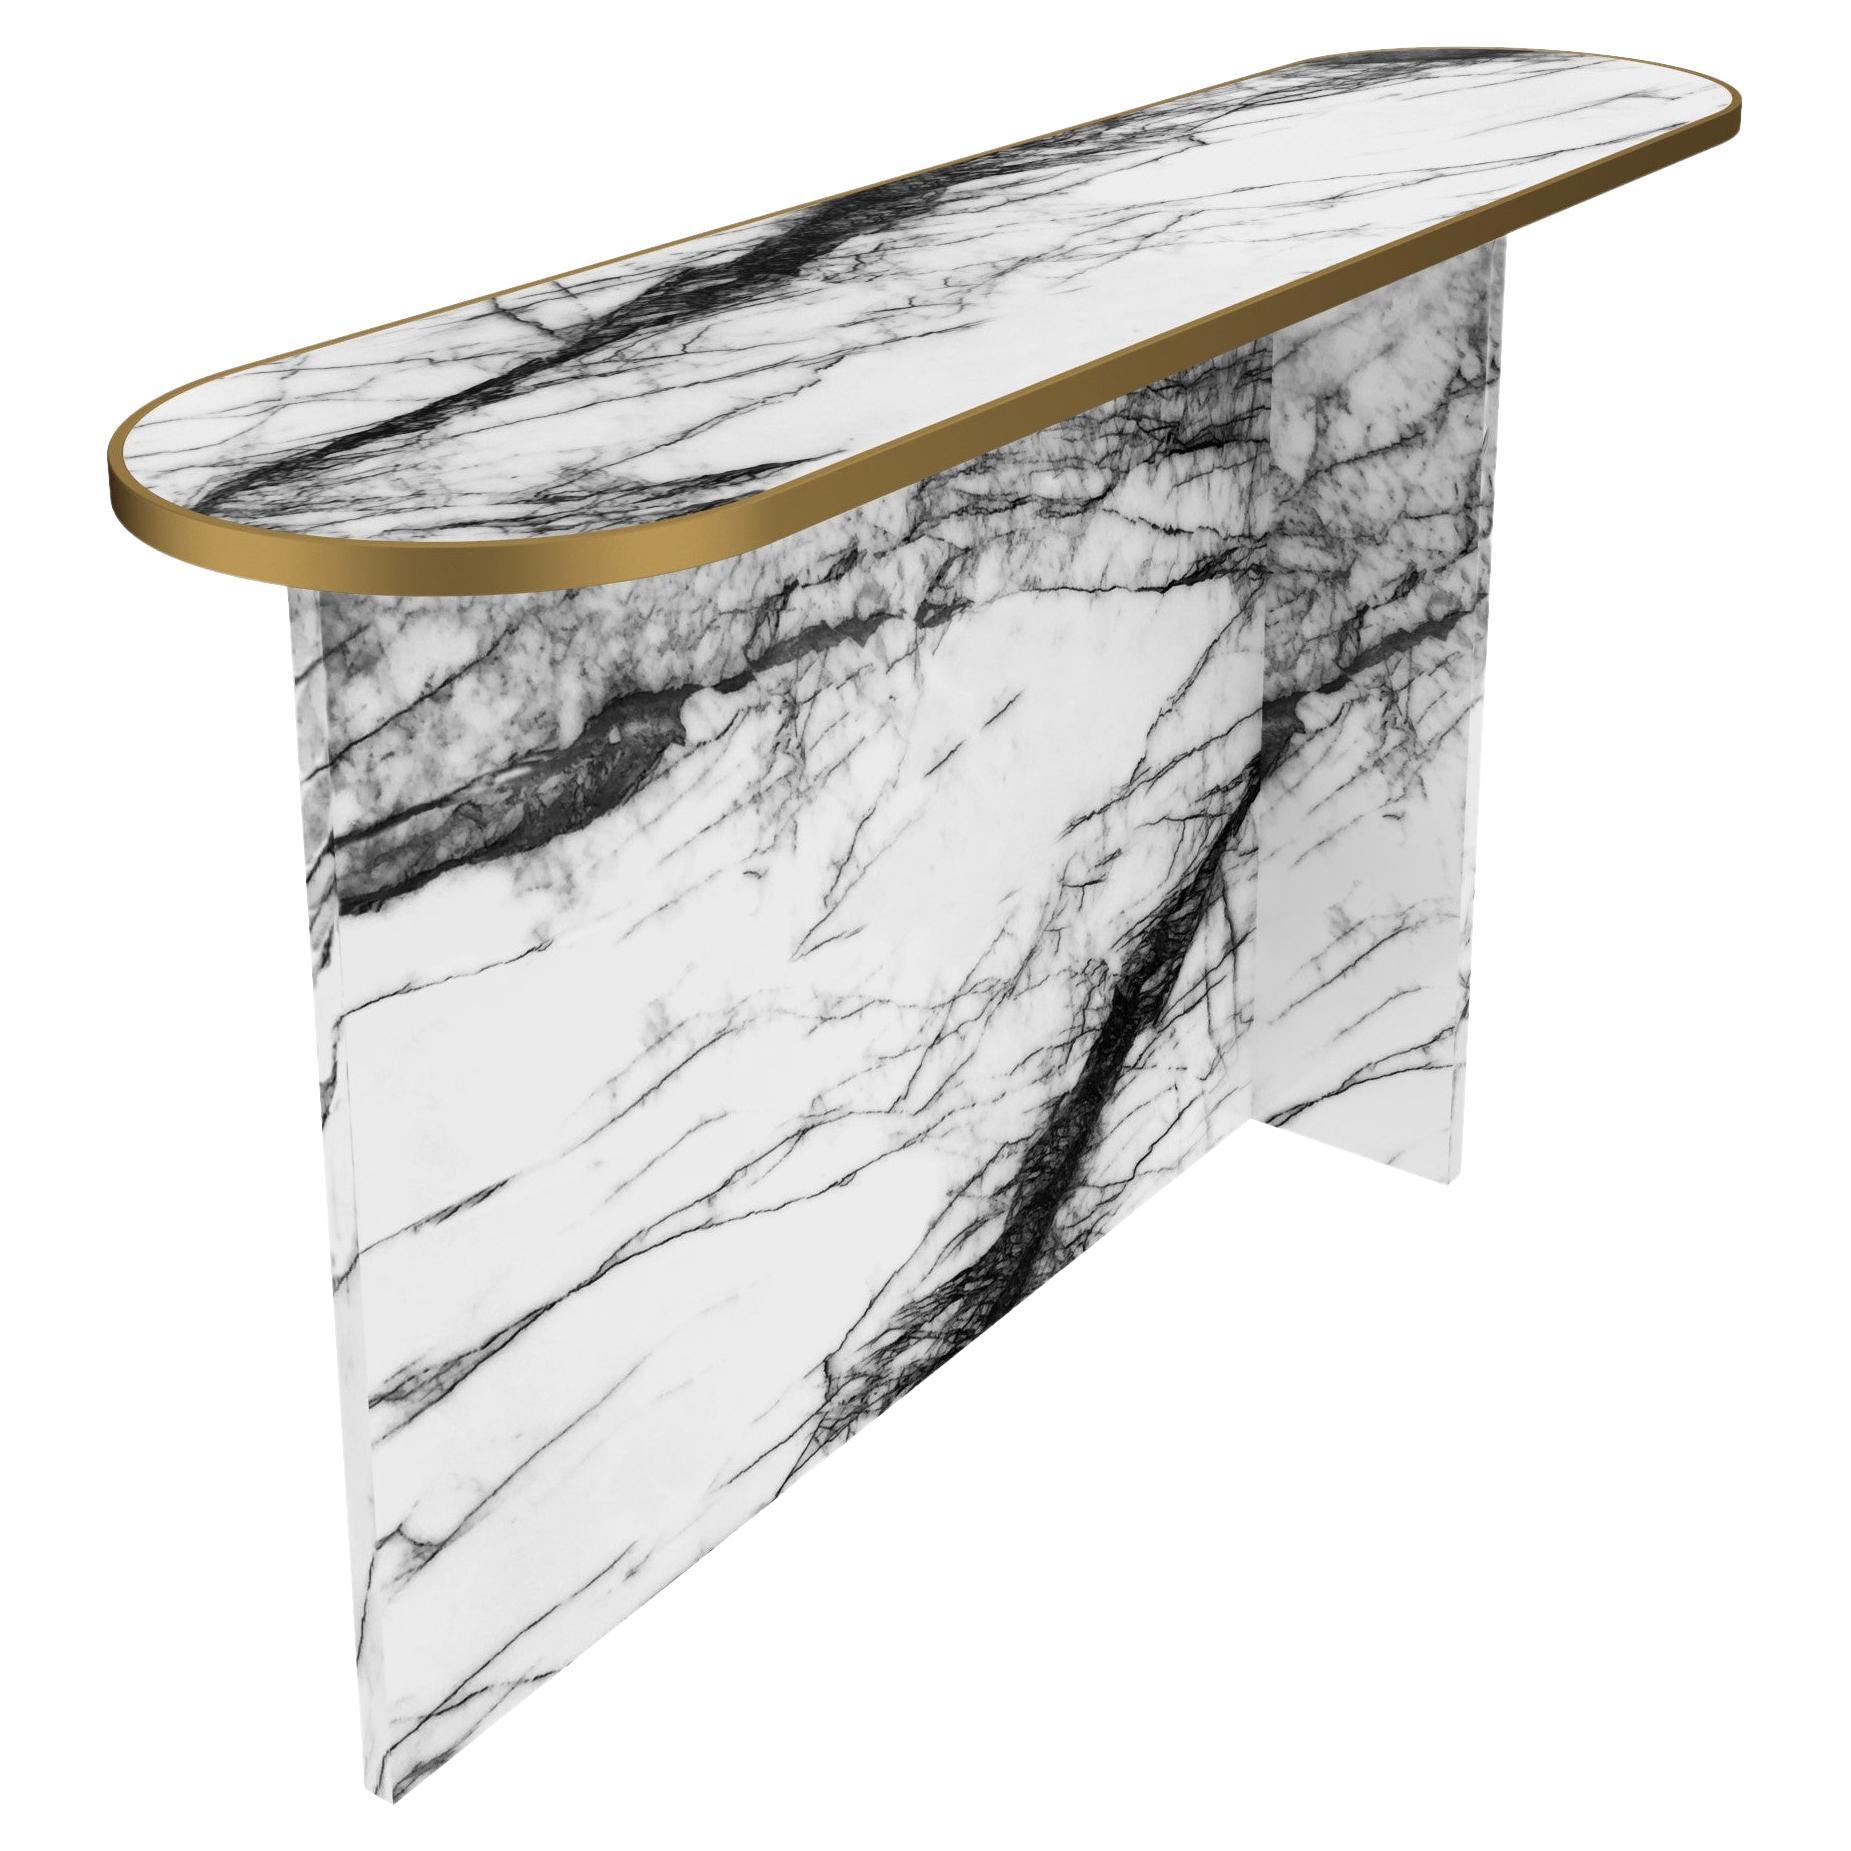 NORDST T-Large Side Table, Italian White Mountain Marble, Danish Modern Design